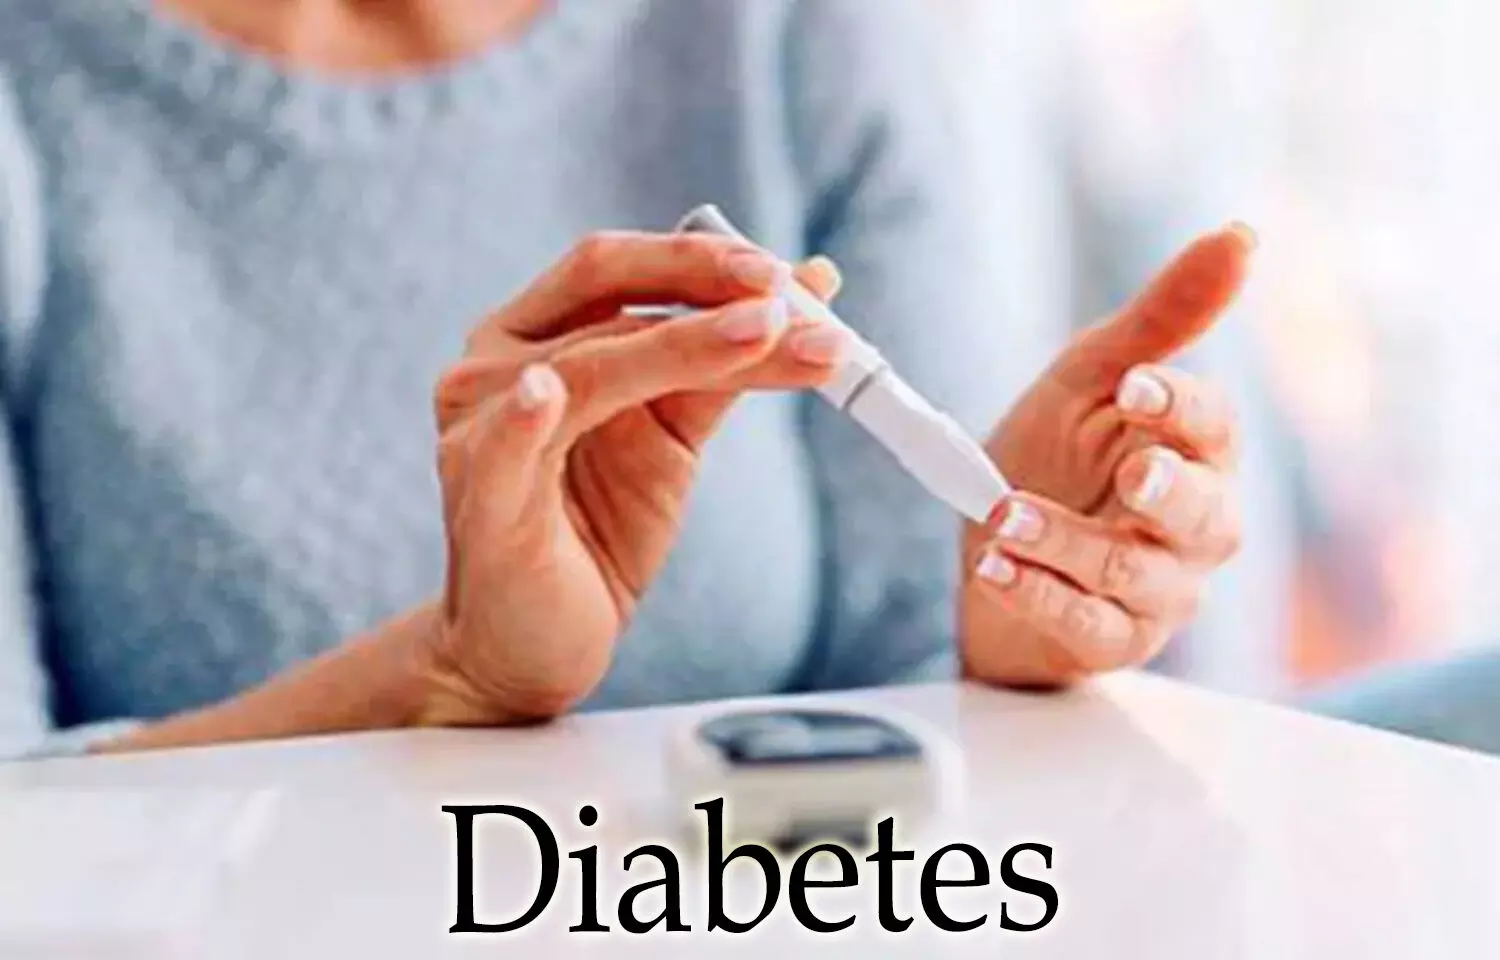 Diabetes associated CVD disease and risk management: ADA 2020